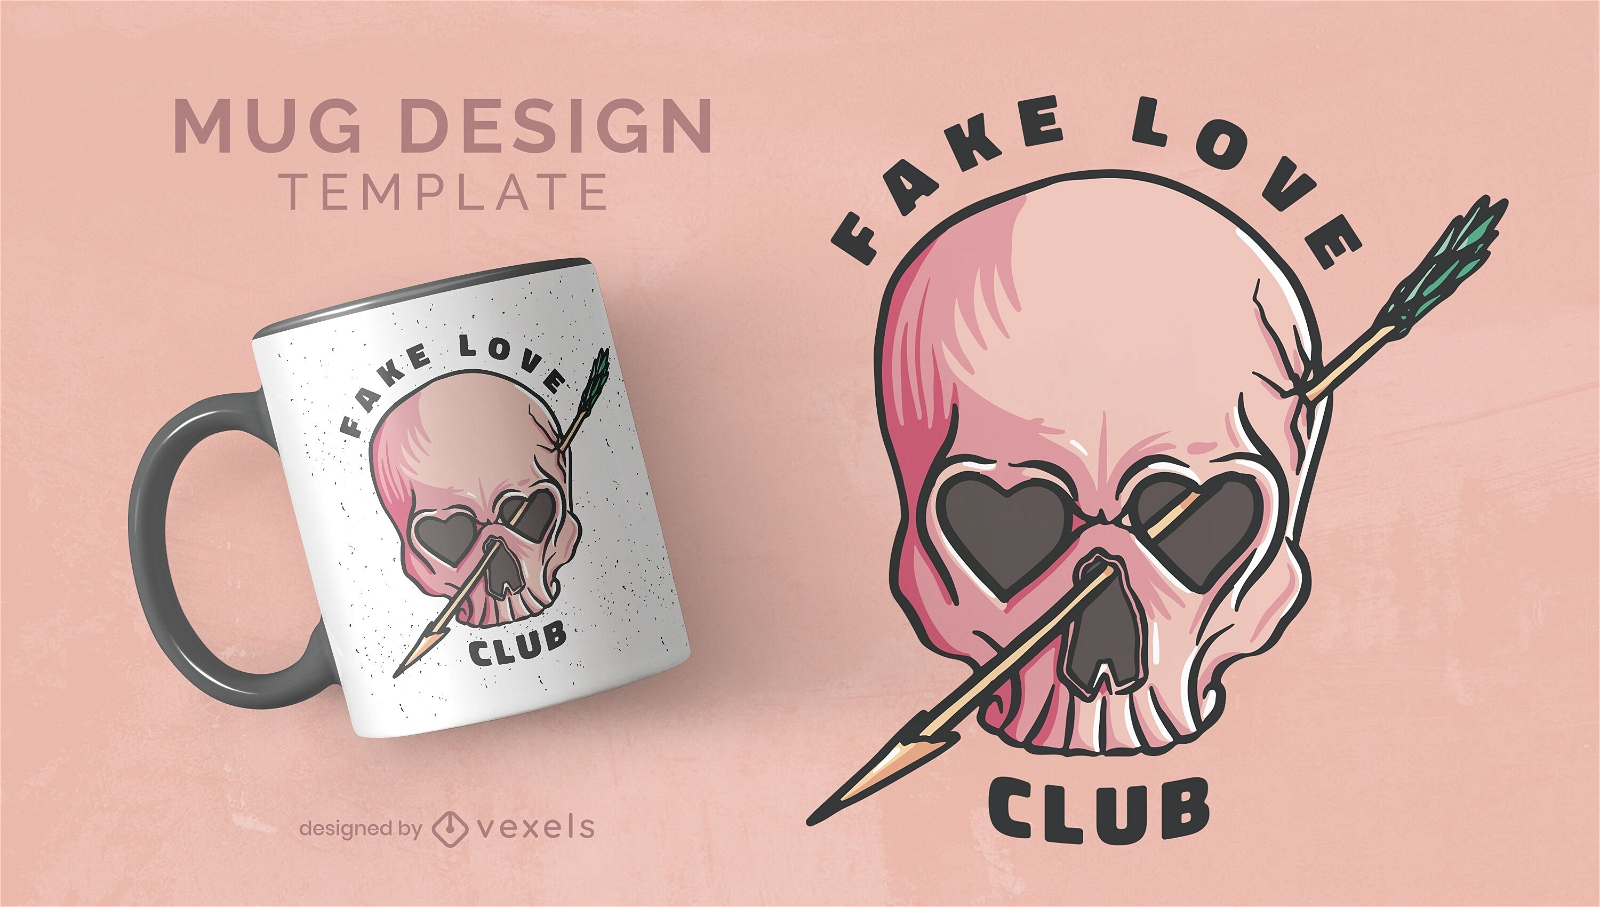 Fake love club skull quote mug template